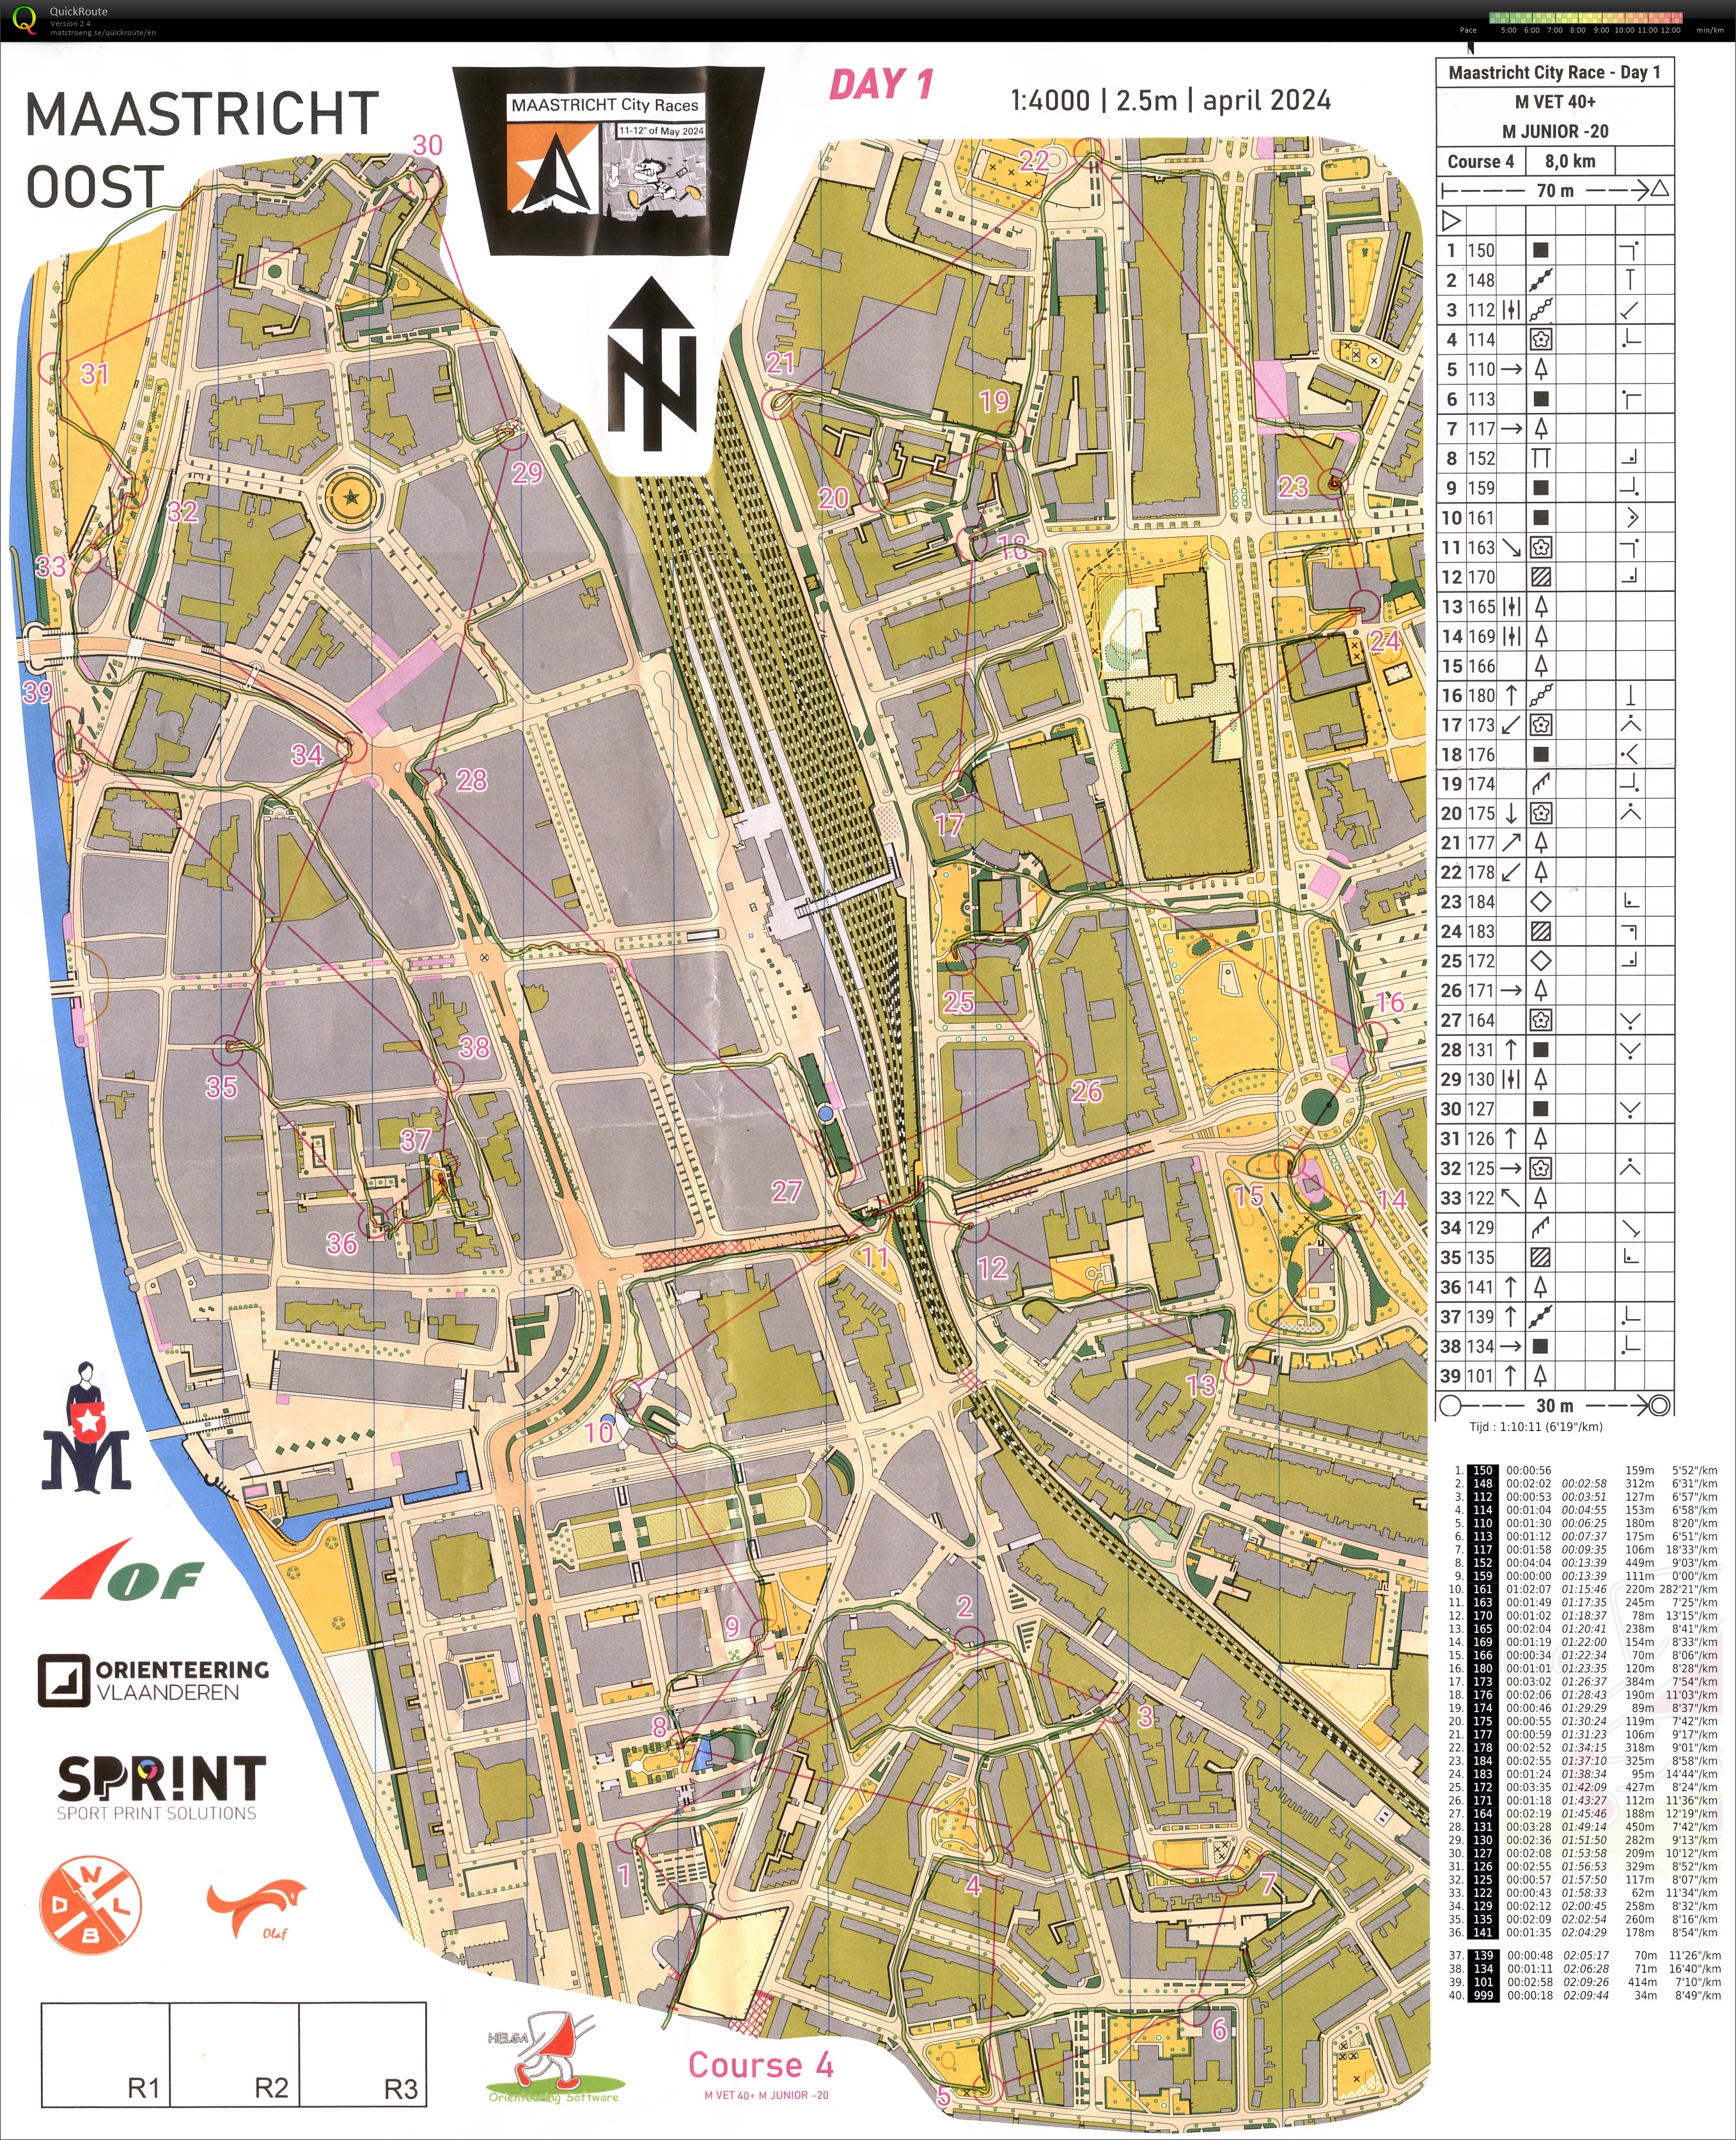 Maastricht City races (11.05.2024)